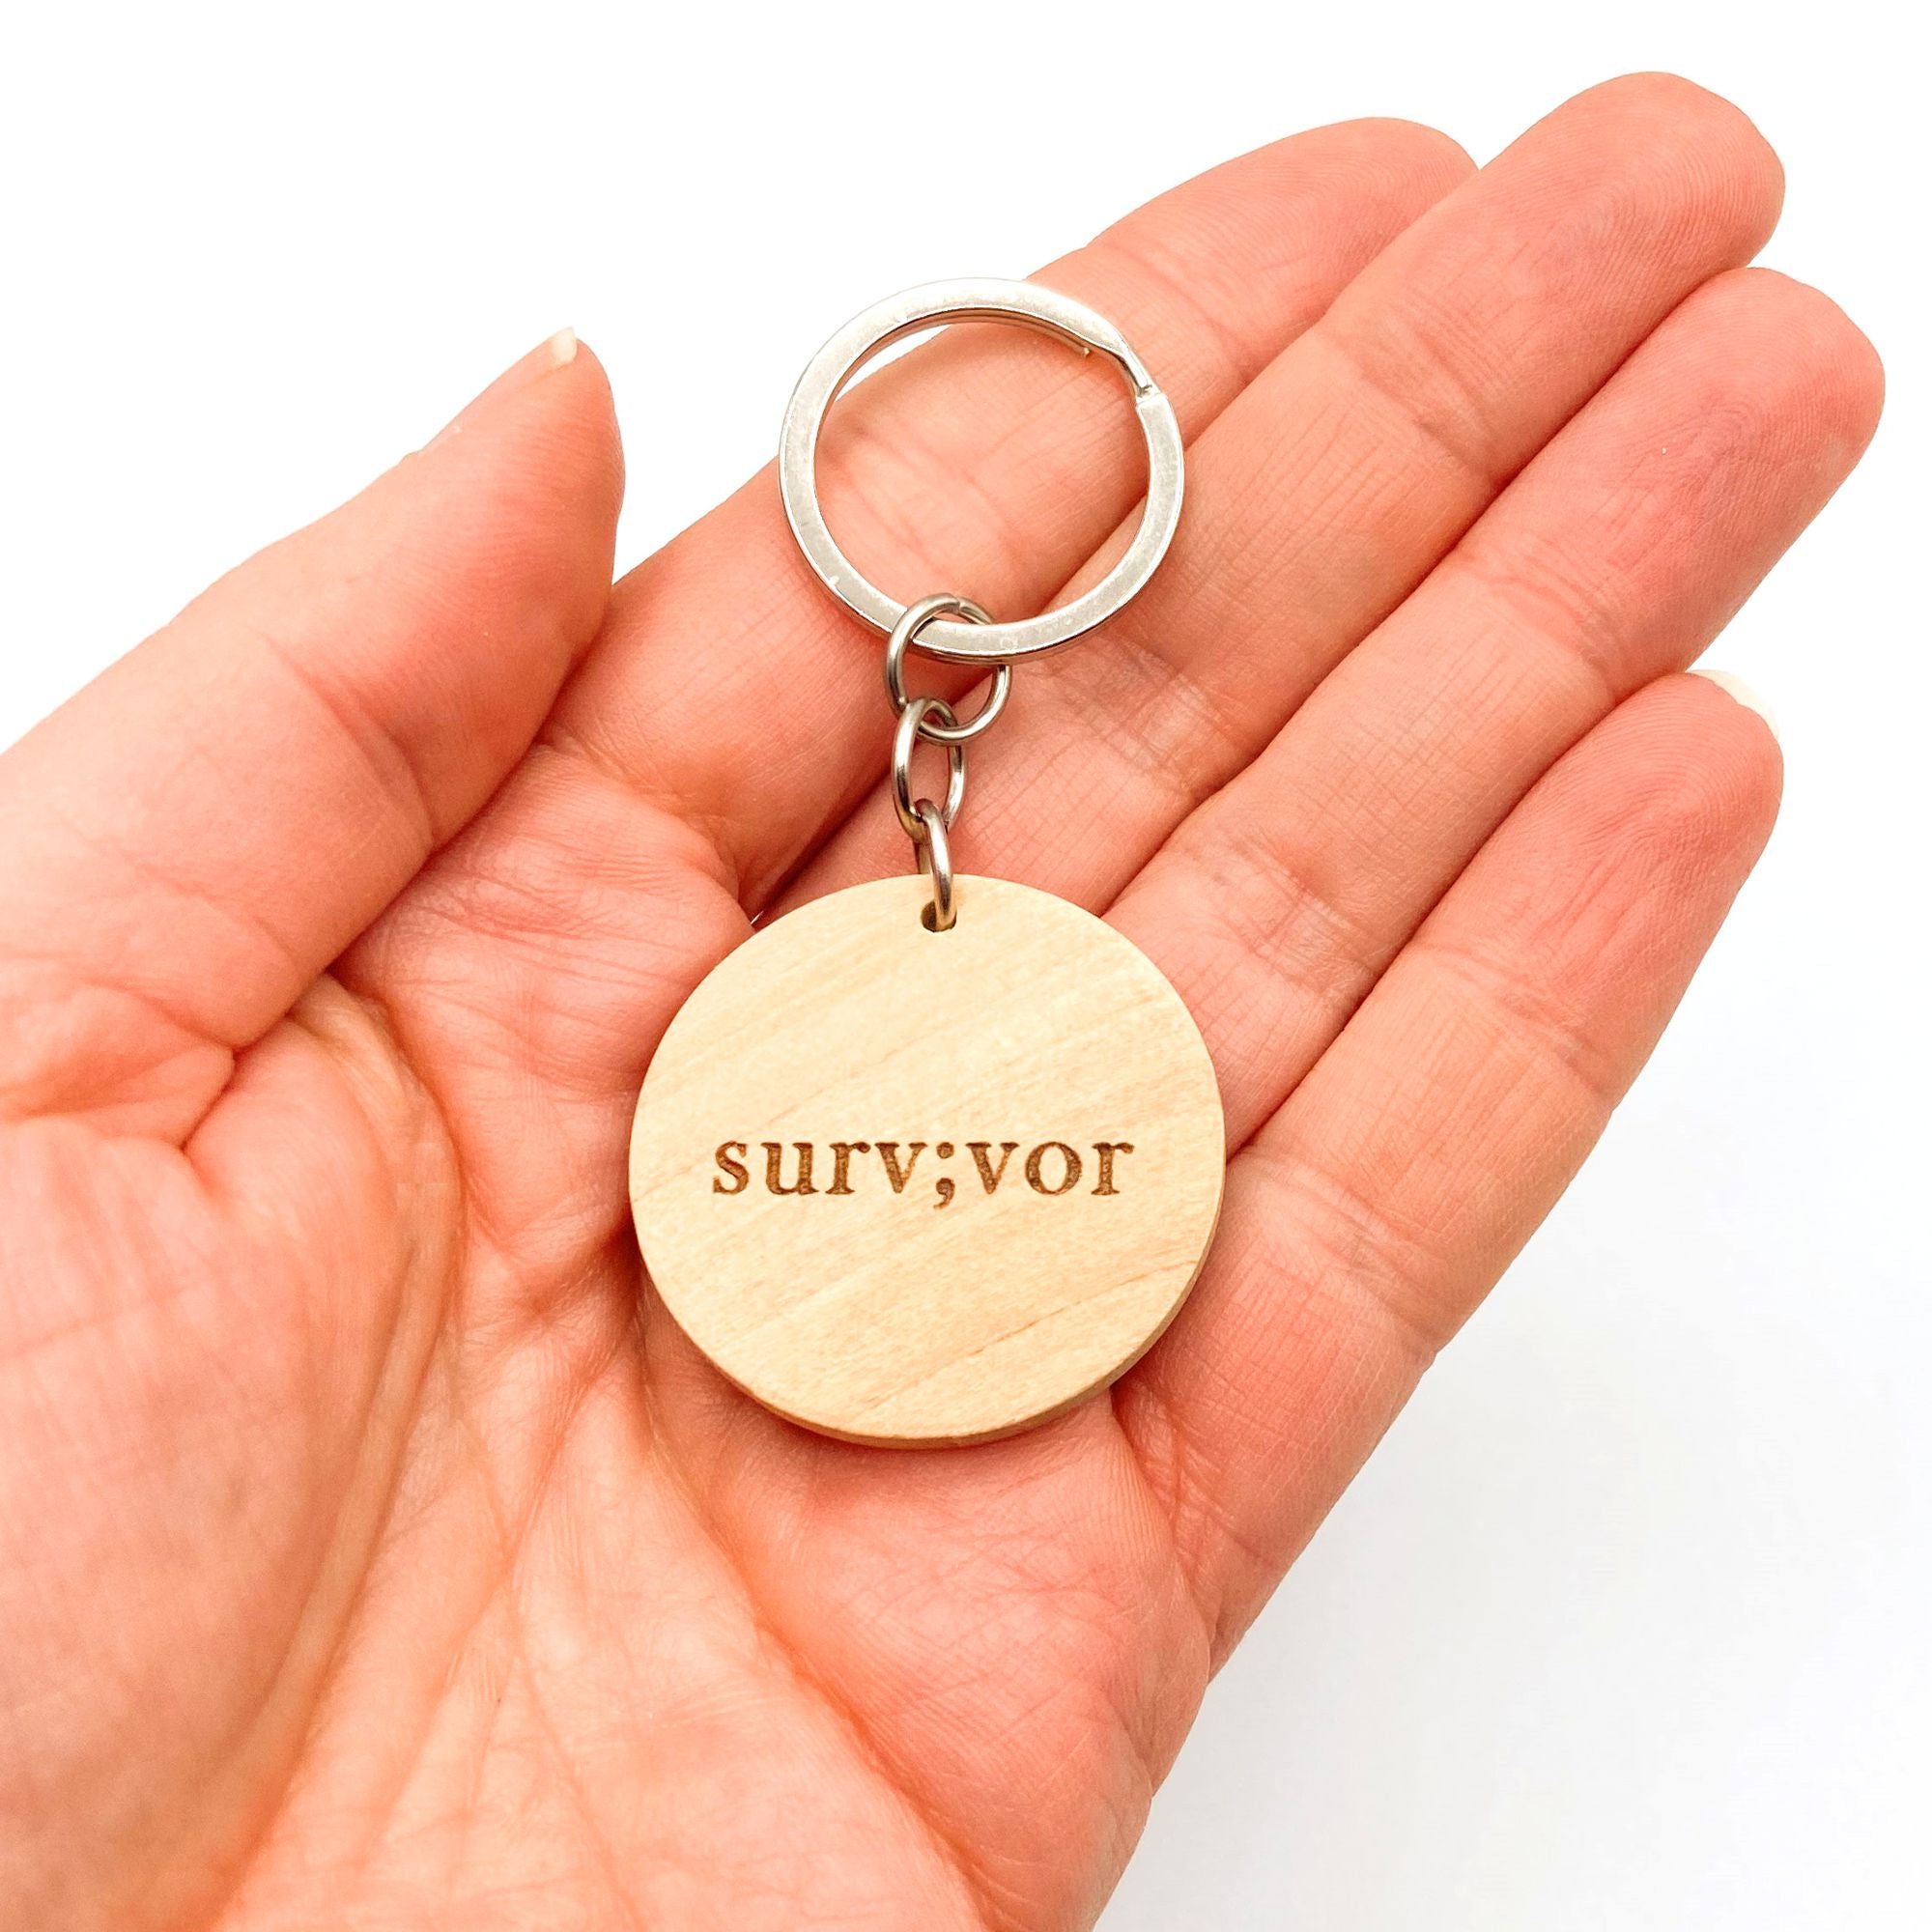 survivor semicolon keychain suicide depression uk